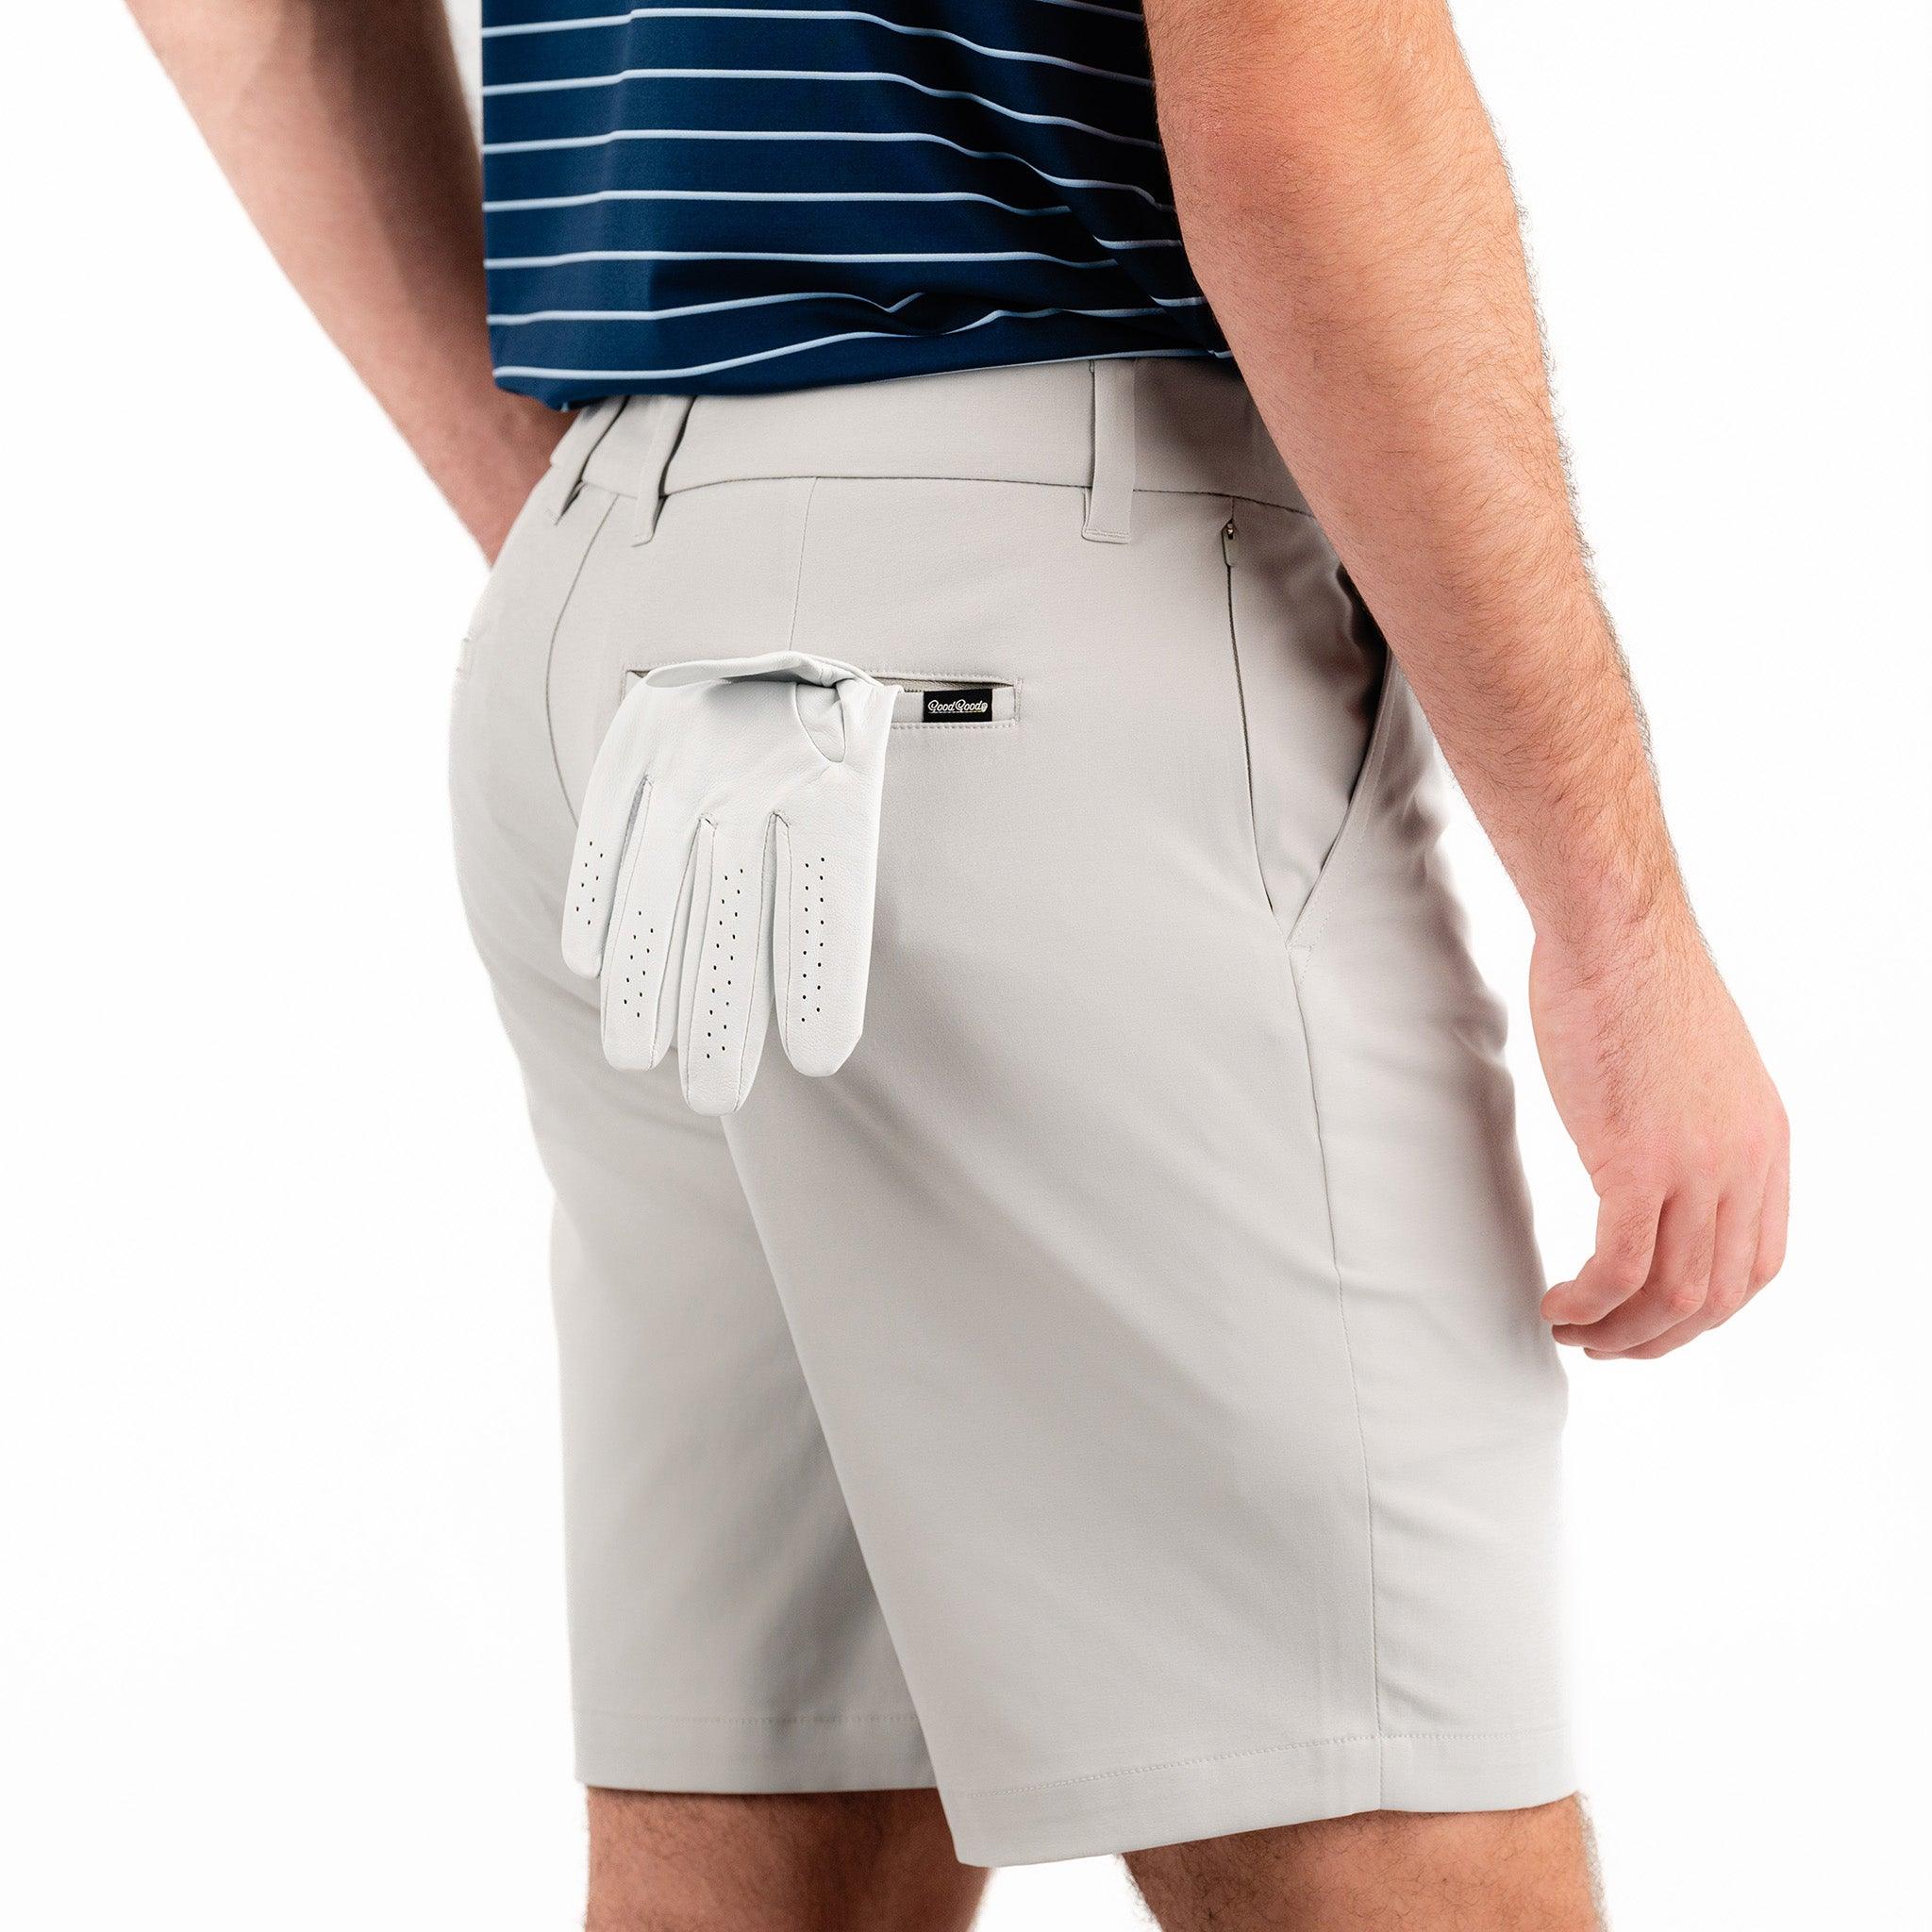 Performance Golf Shorts - Good Good Golf shorts